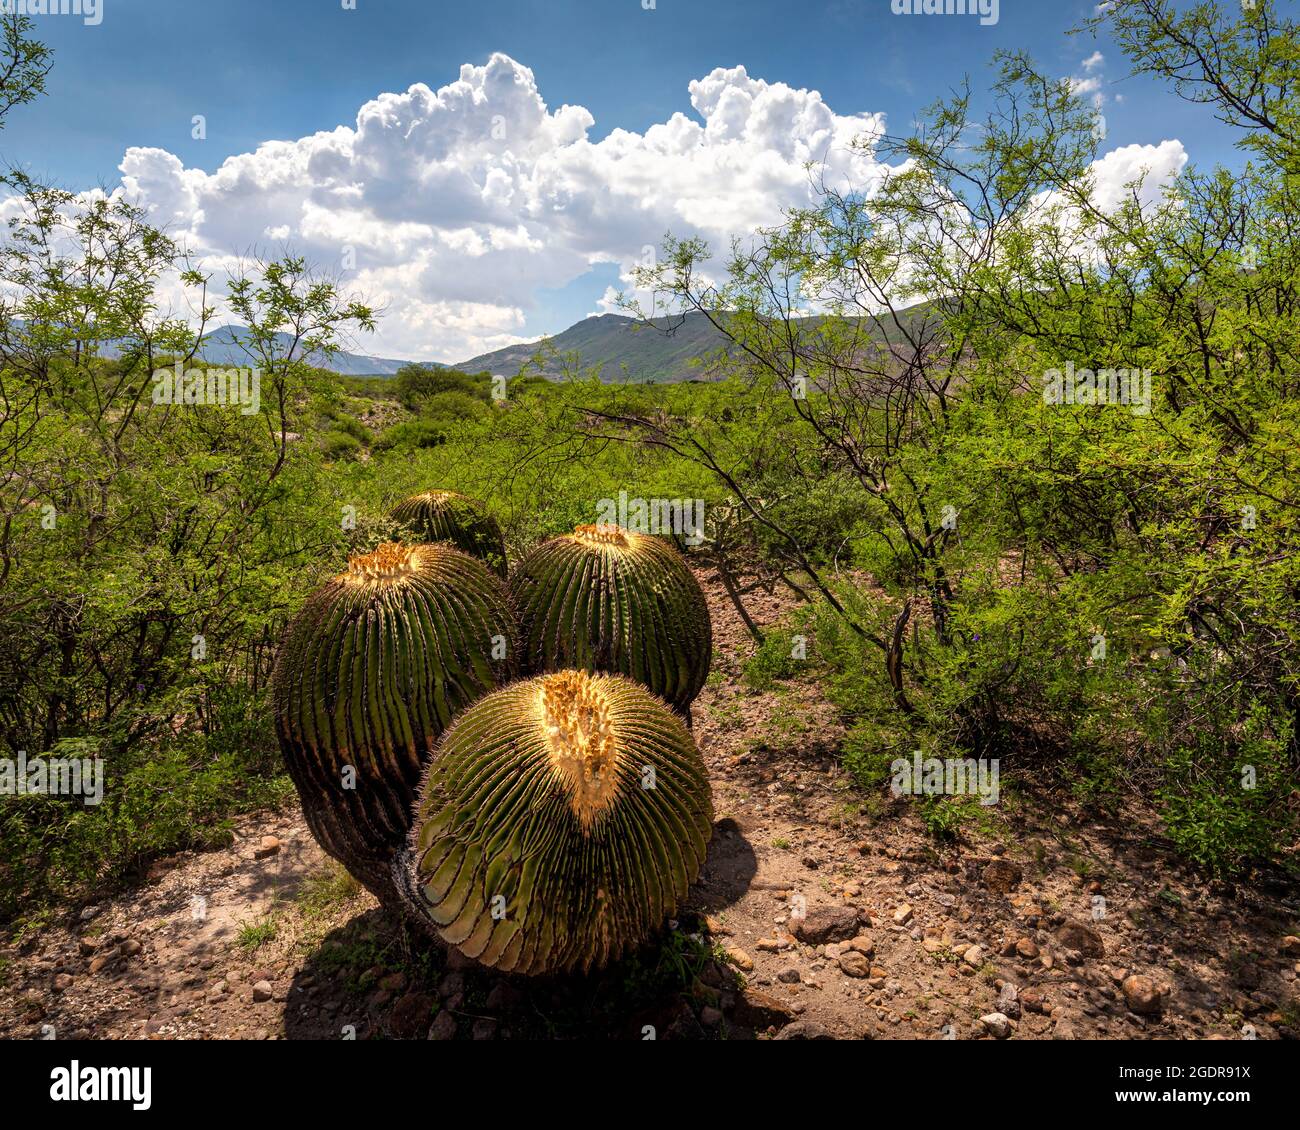 Large Golden Barrel cactus in the Guanajuato, Mexico landscape. Stock Photo